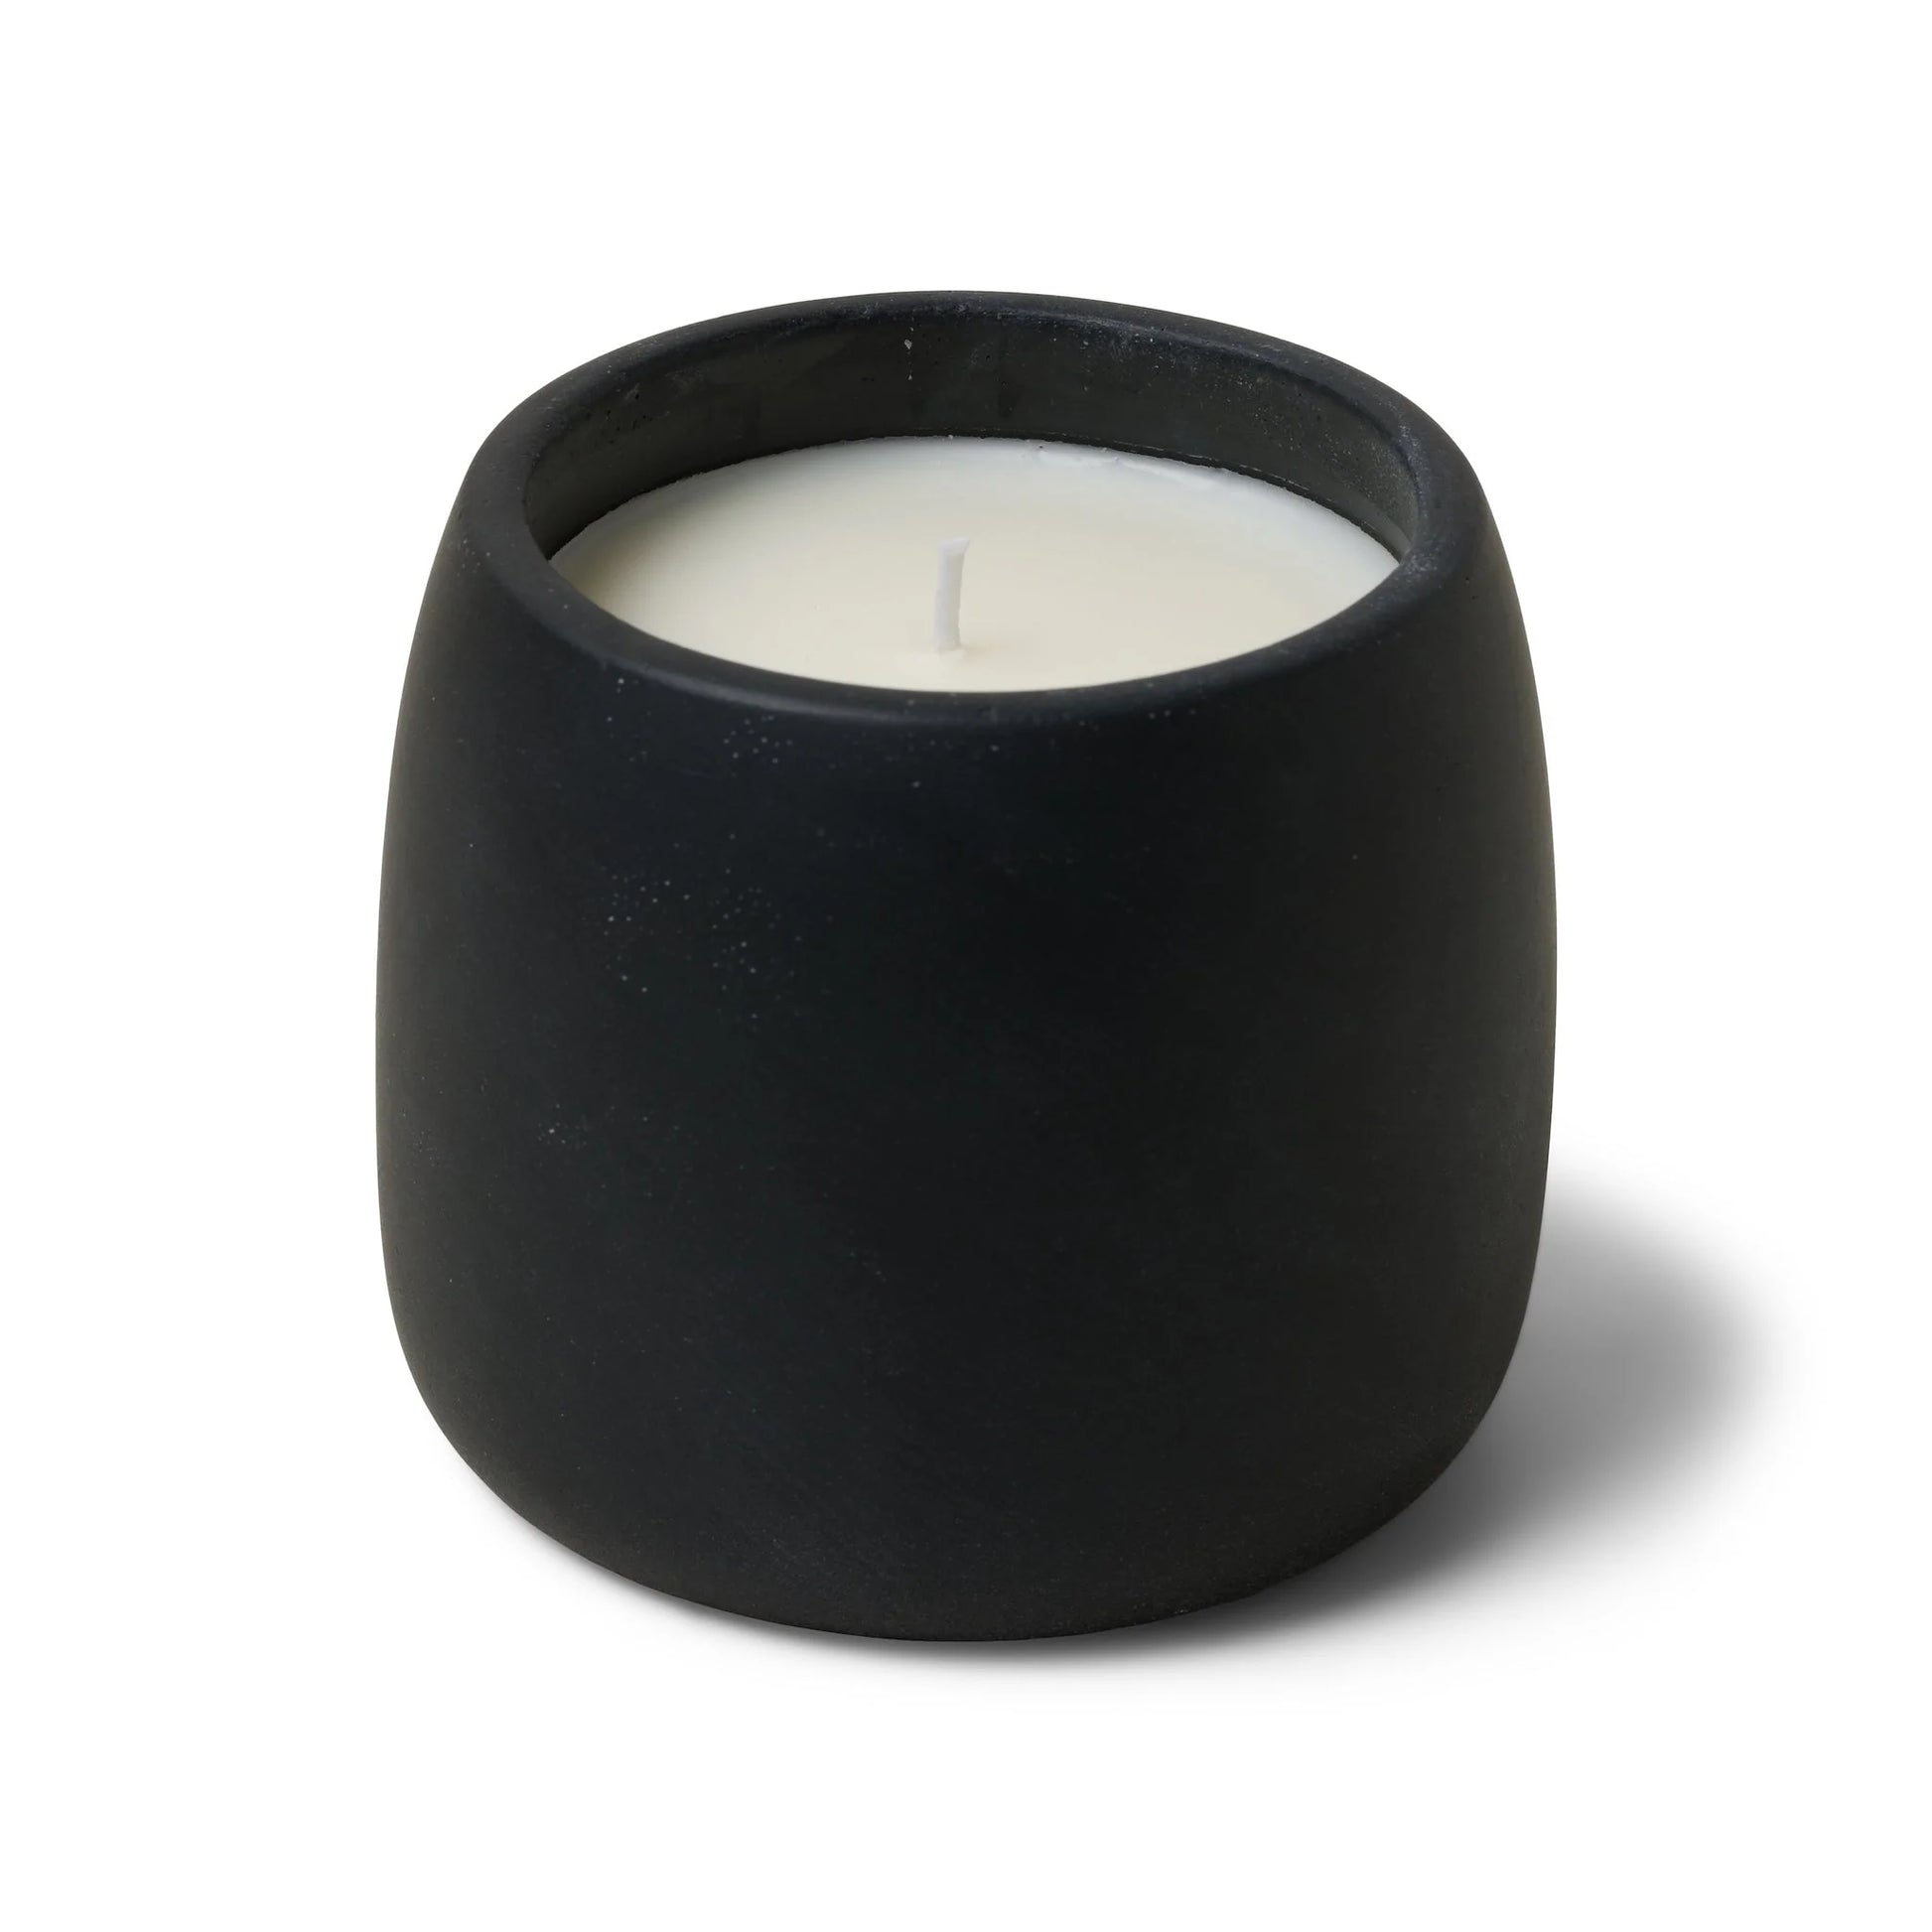 Elements 9 oz Candle - Amber Oak in concrete vessel